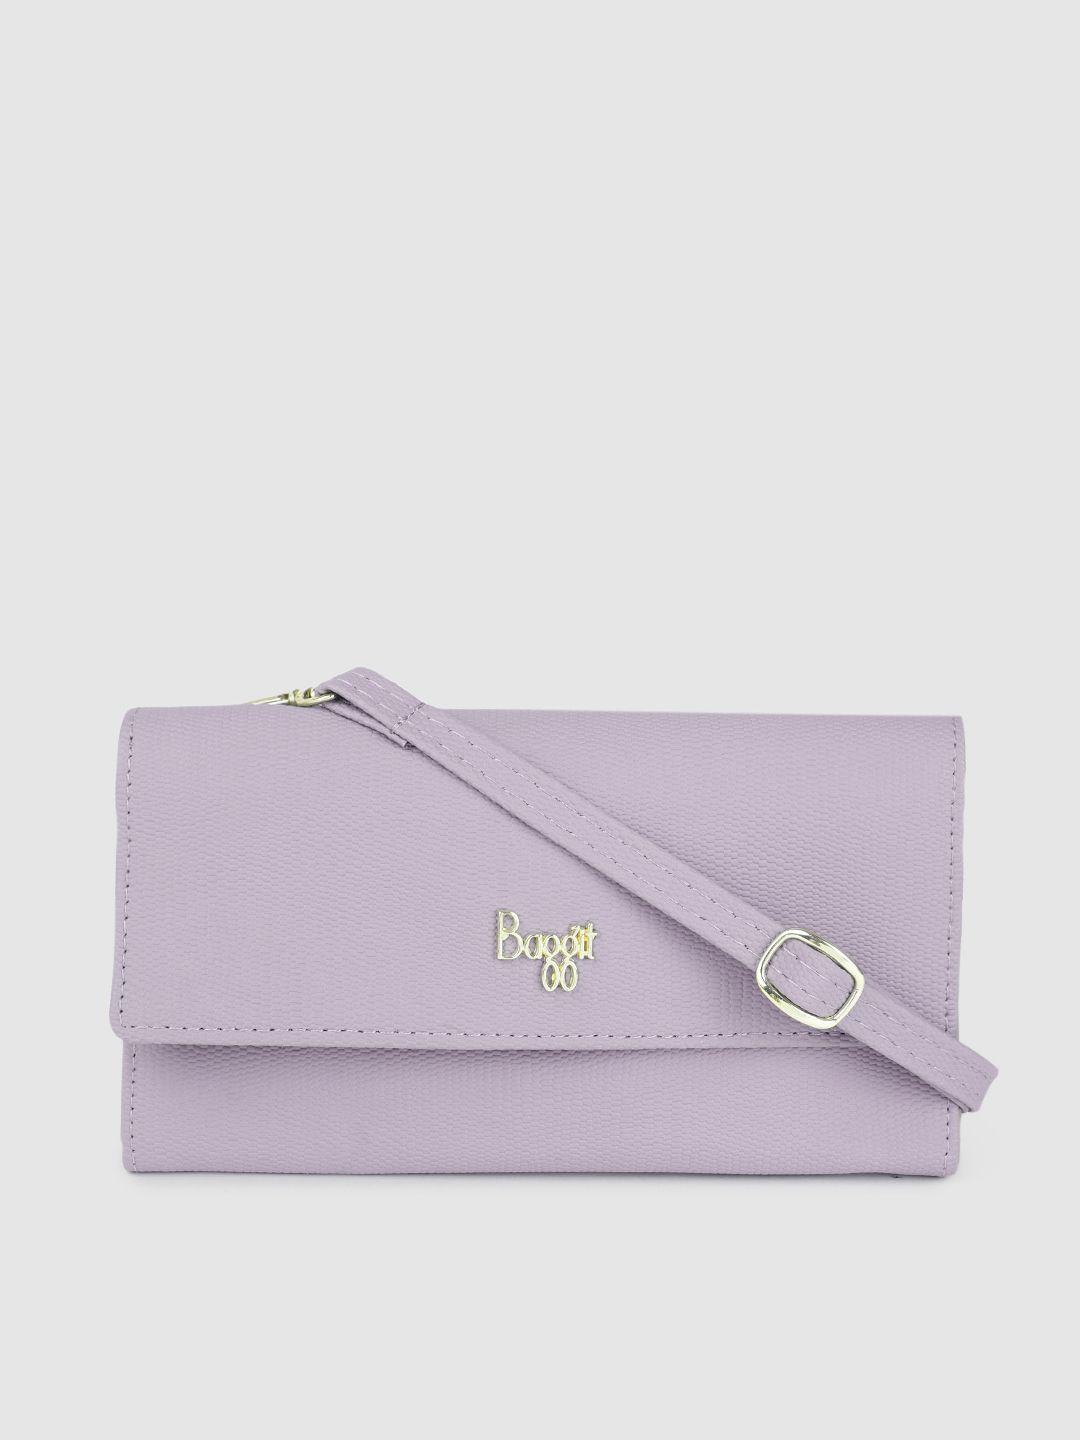 baggit women envelope wallet with sling strap